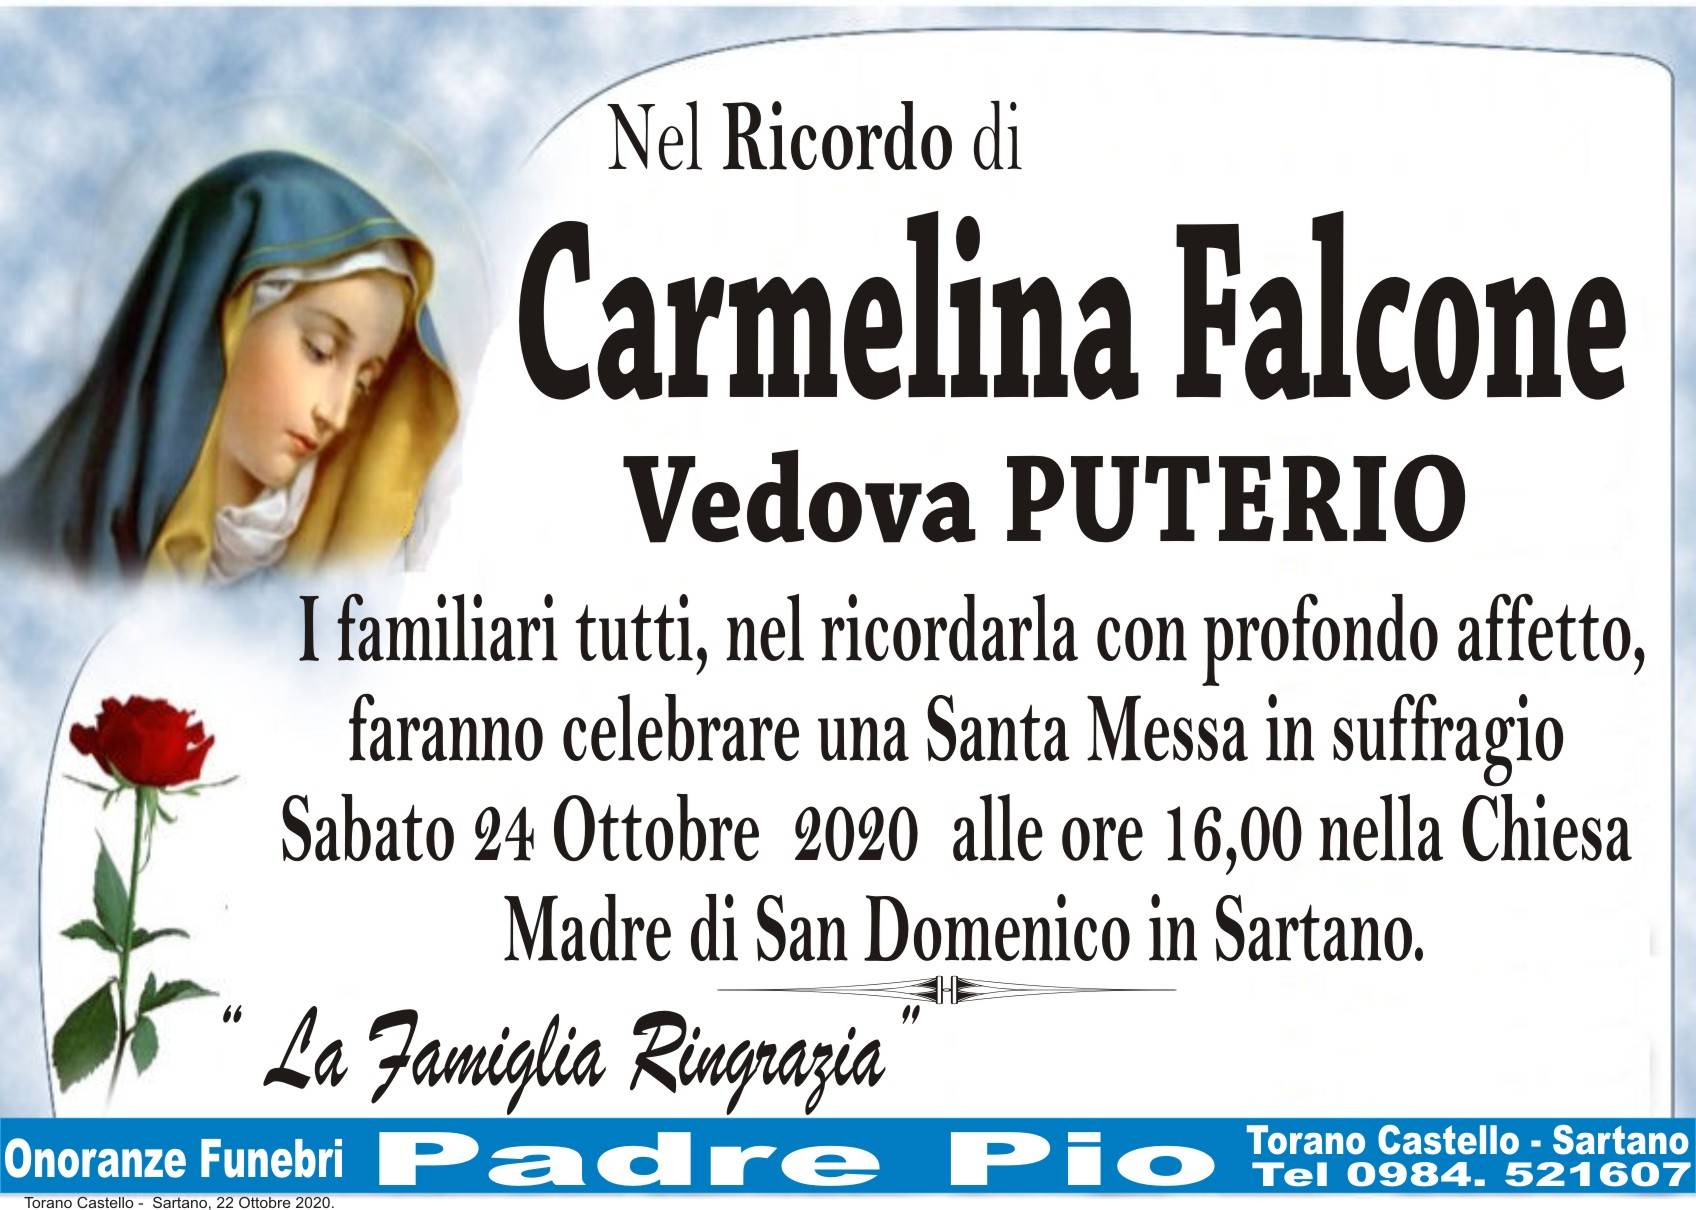 Carmelina Falcone